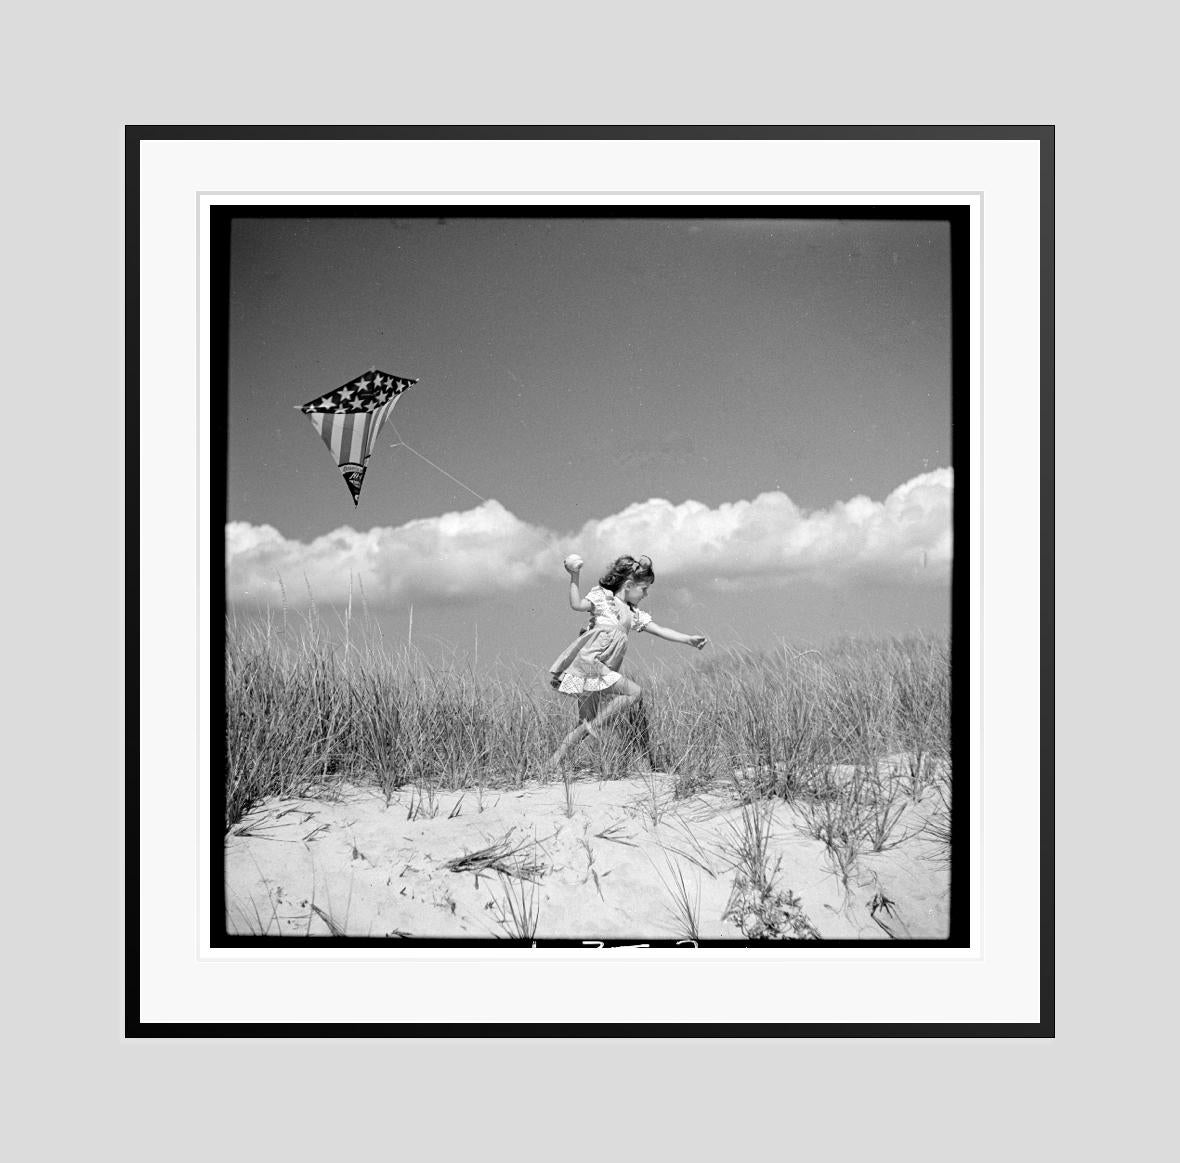 Der Wind 

1944

Toni Frissells Tochter Sidney am Strand als der Wind aus A Child's Garden of Verses, Southampton, Long Island, USA, 1944.

von Toni Frissell

30 x 30